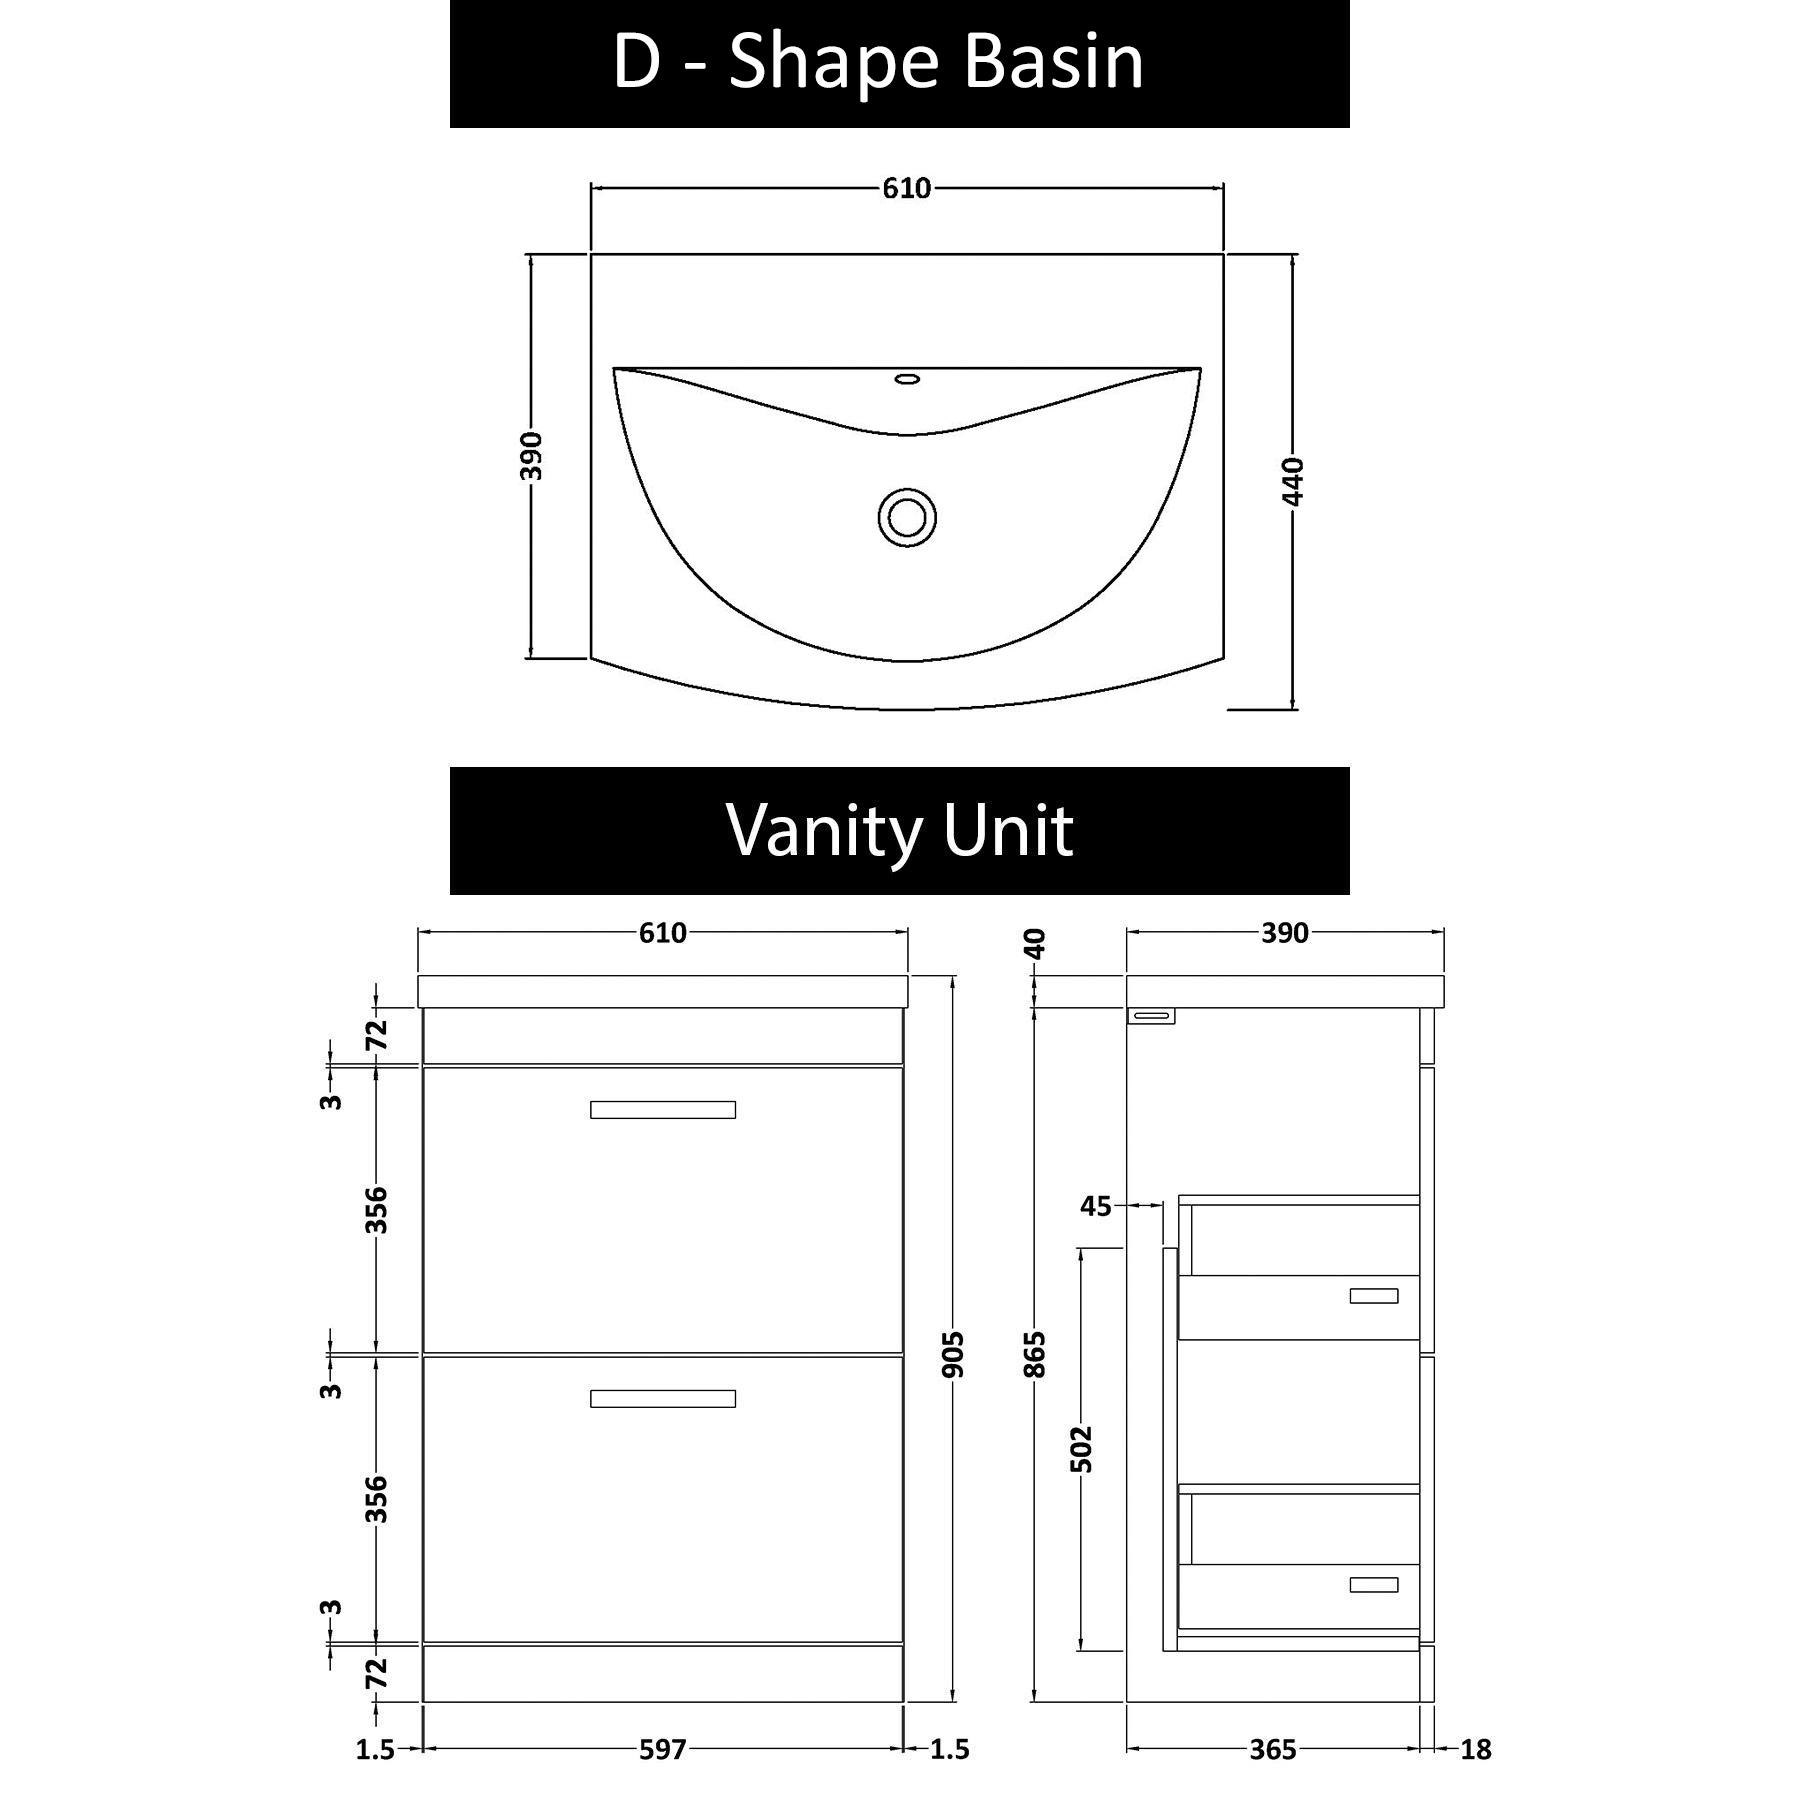  Marbella 500/600/800mm Grey Elm 2 Drawer Floor Standing Vanity Unit with Curved Basin